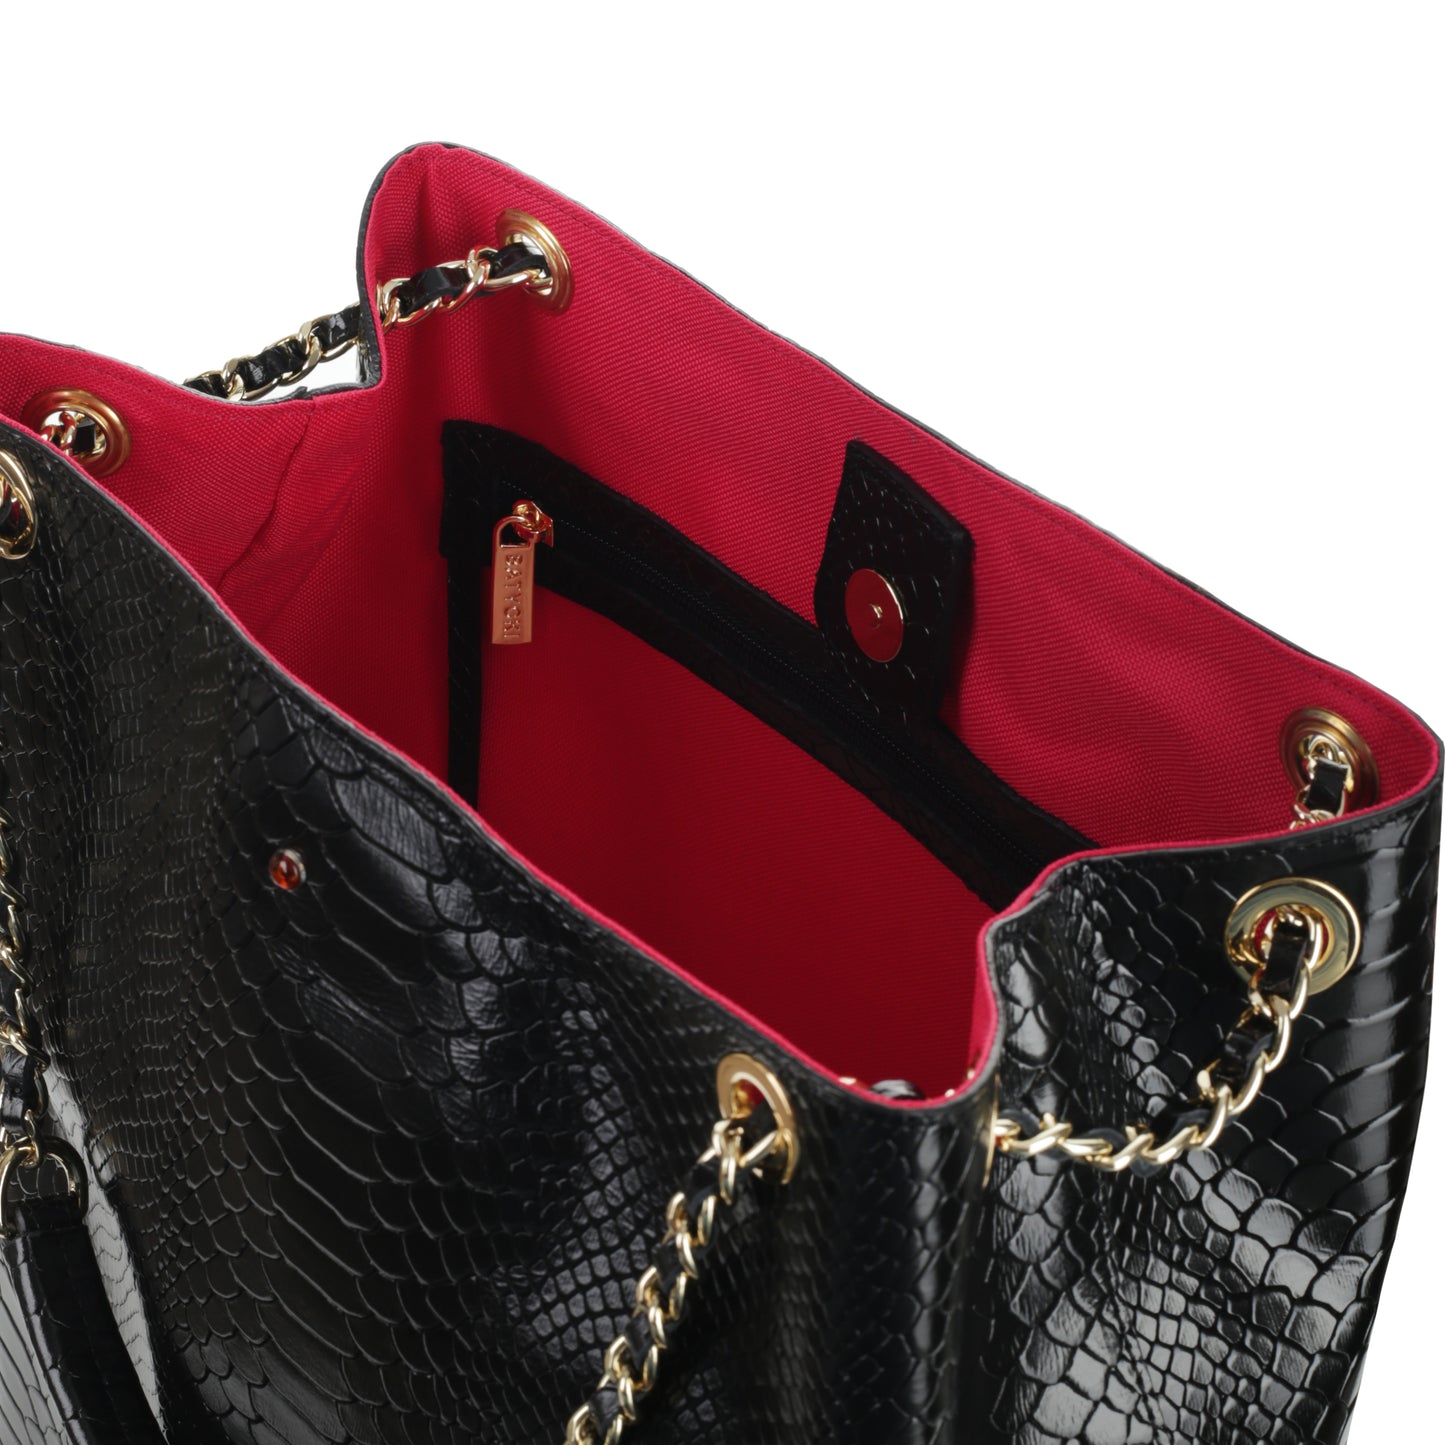 AMELIA BLACK leather women's handbag